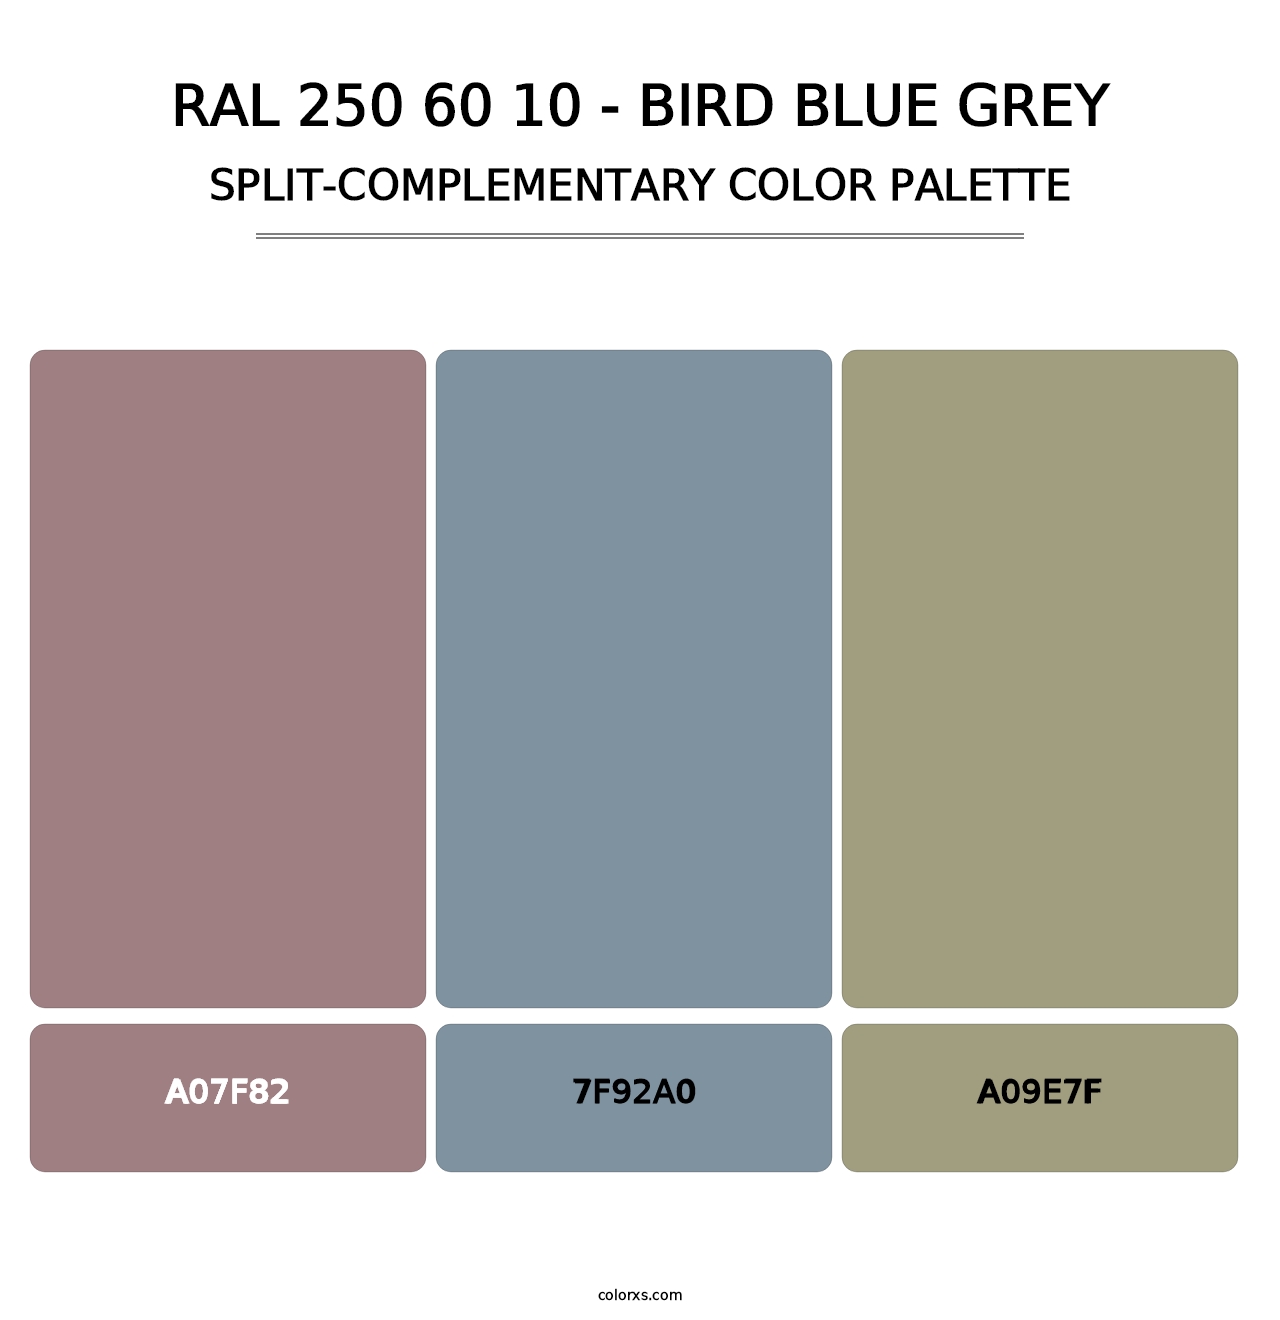 RAL 250 60 10 - Bird Blue Grey - Split-Complementary Color Palette